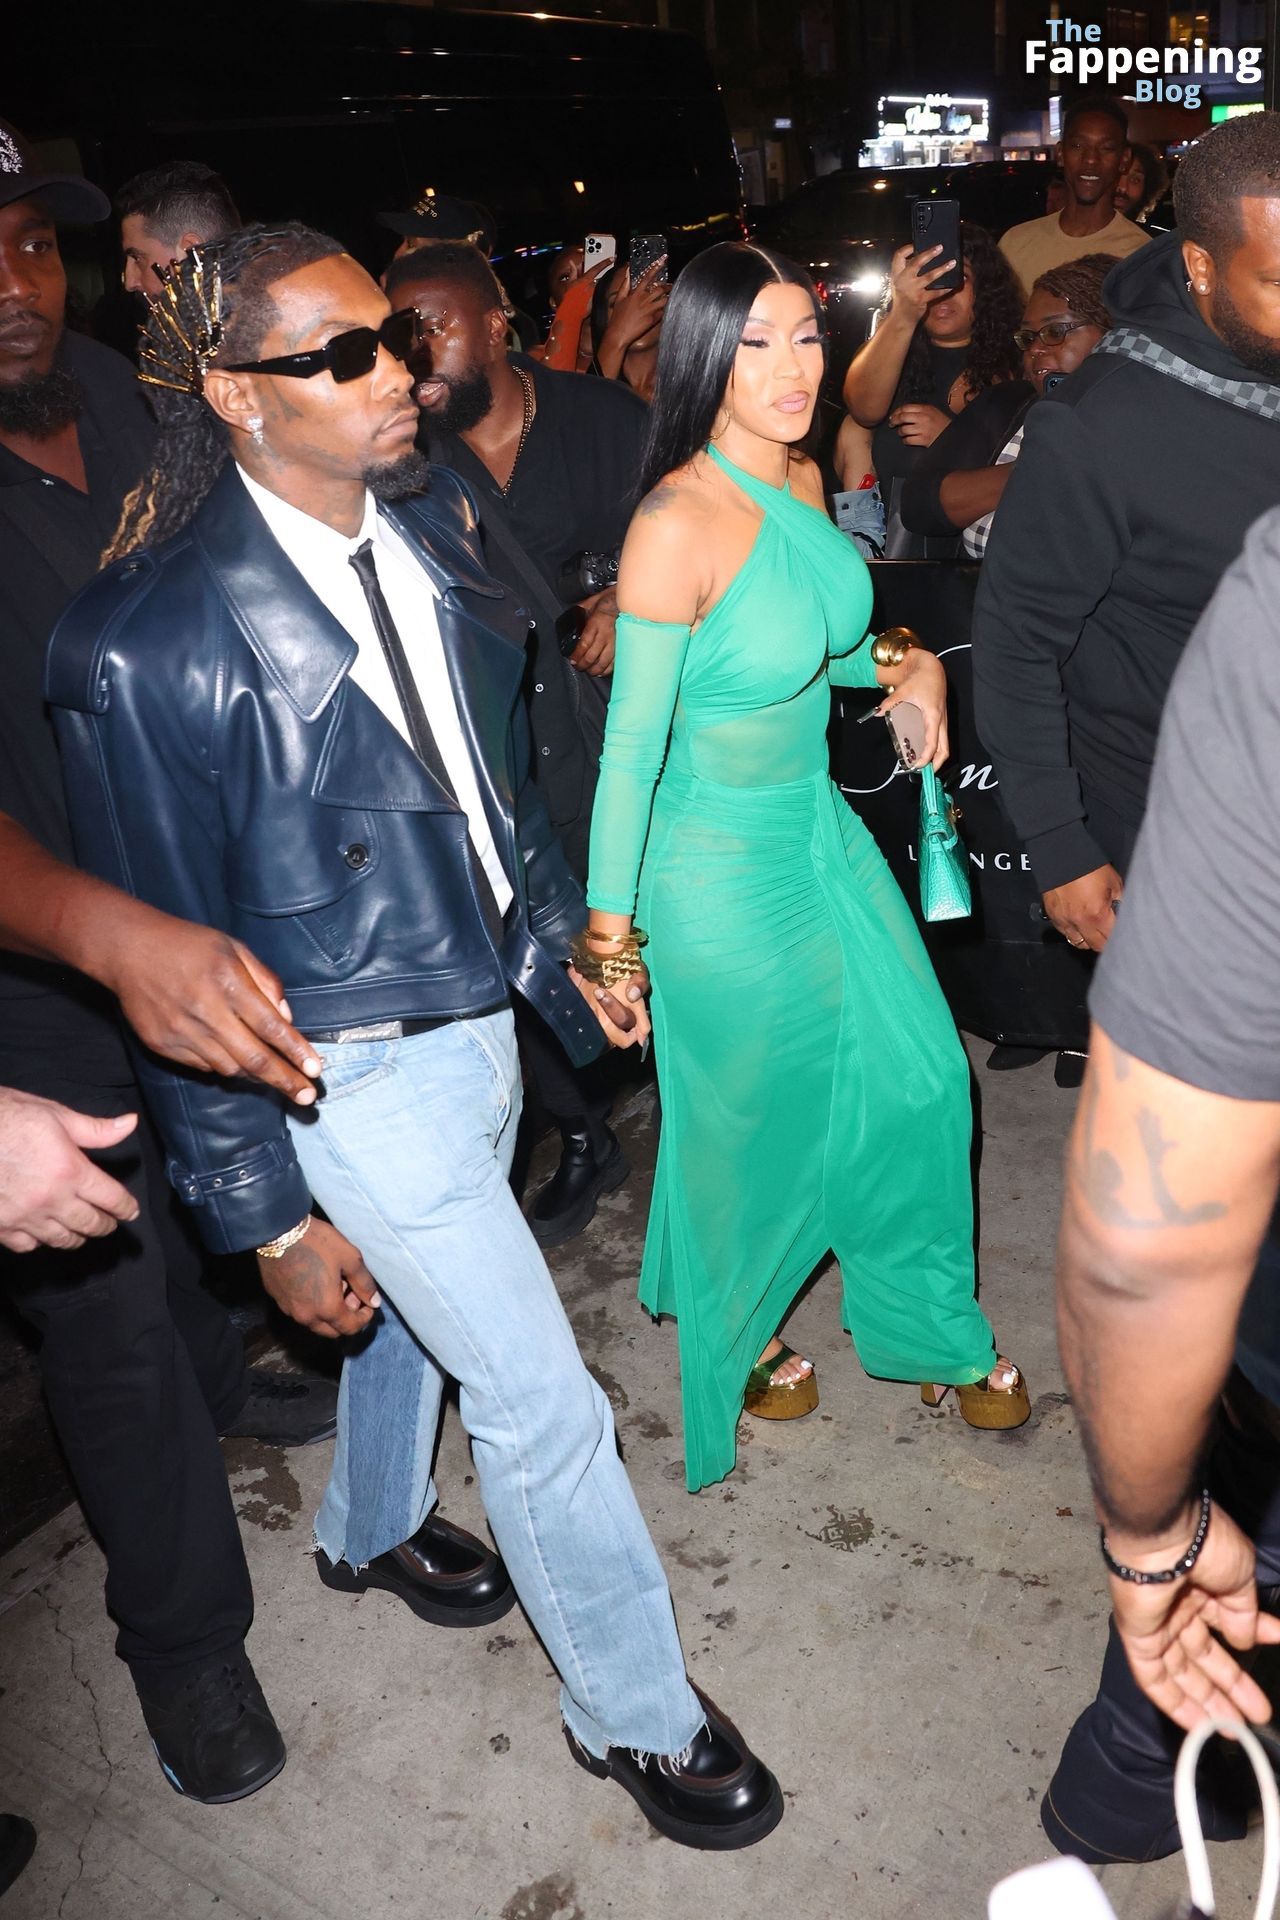 Cardi B Looks Hot in a See-Through Green Dress (24 Photos)